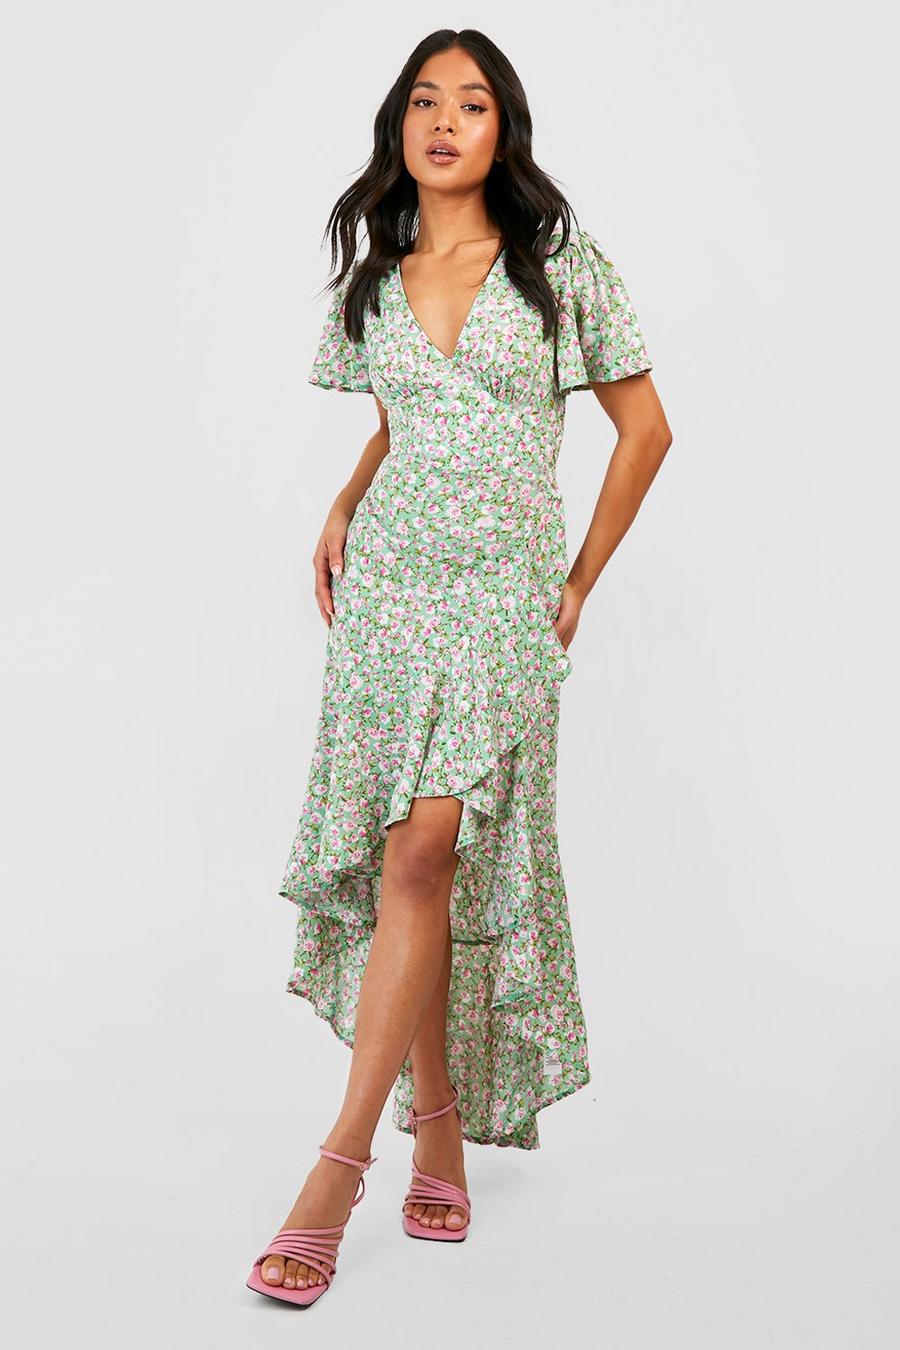 https://media.boohoo.com/i/boohoo/gzz44332_green_xl/female-green-petite-ditsy-floral-angel-sleeve-wrap-midi-dress/?w=900&qlt=default&fmt.jp2.qlt=70&fmt=auto&sm=fit